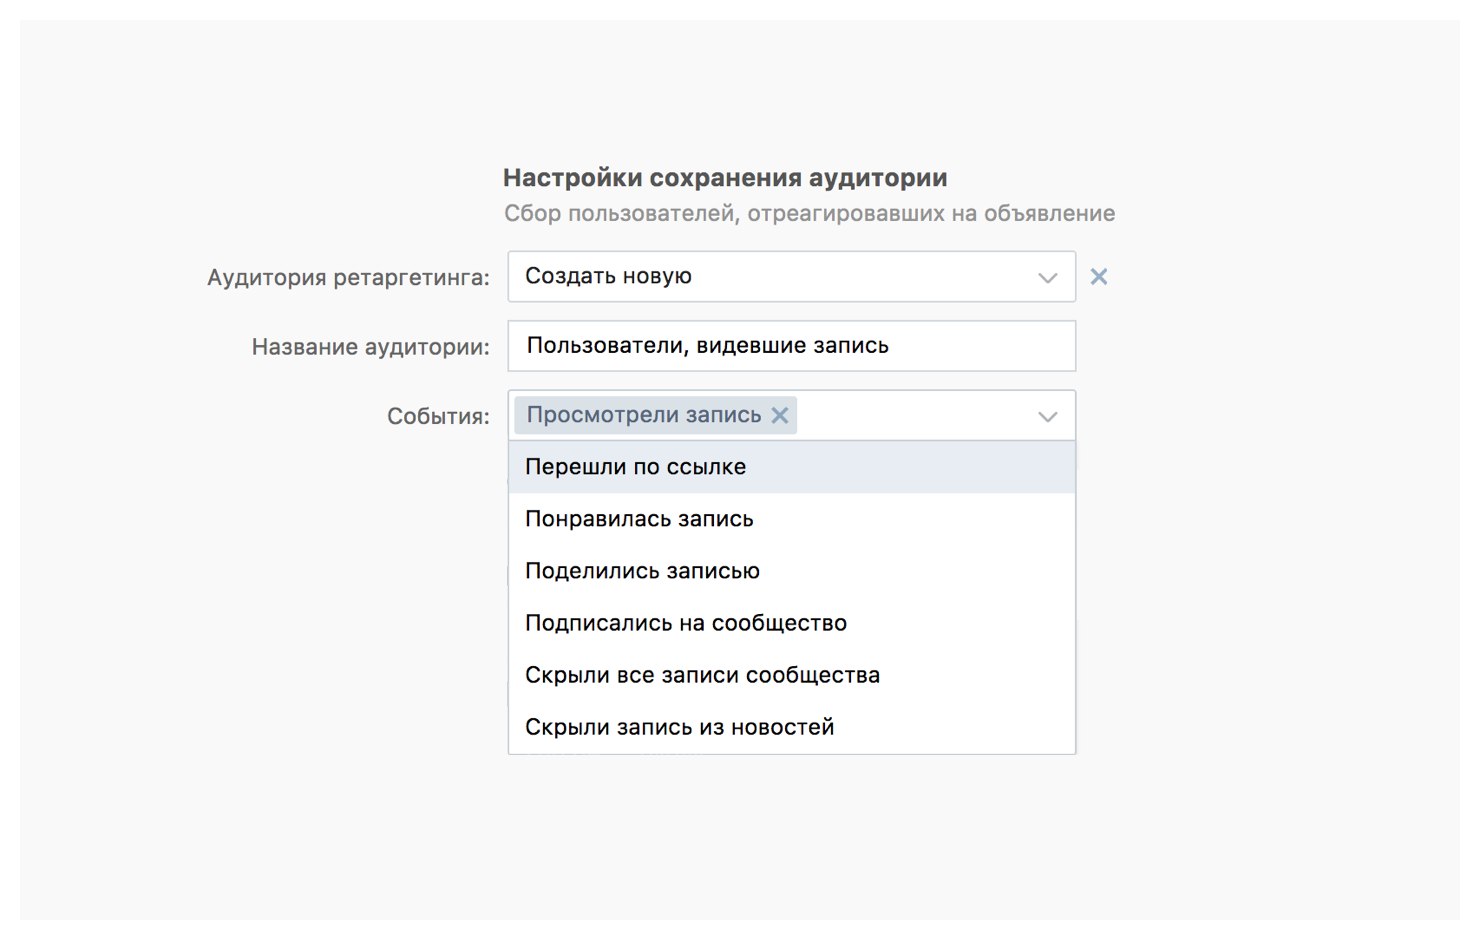 kak-raskrutit-soobshhestvo-vkontakte-17 Как раскрутить сообщество онлайн-школы через рекламу в группах Вконтакте